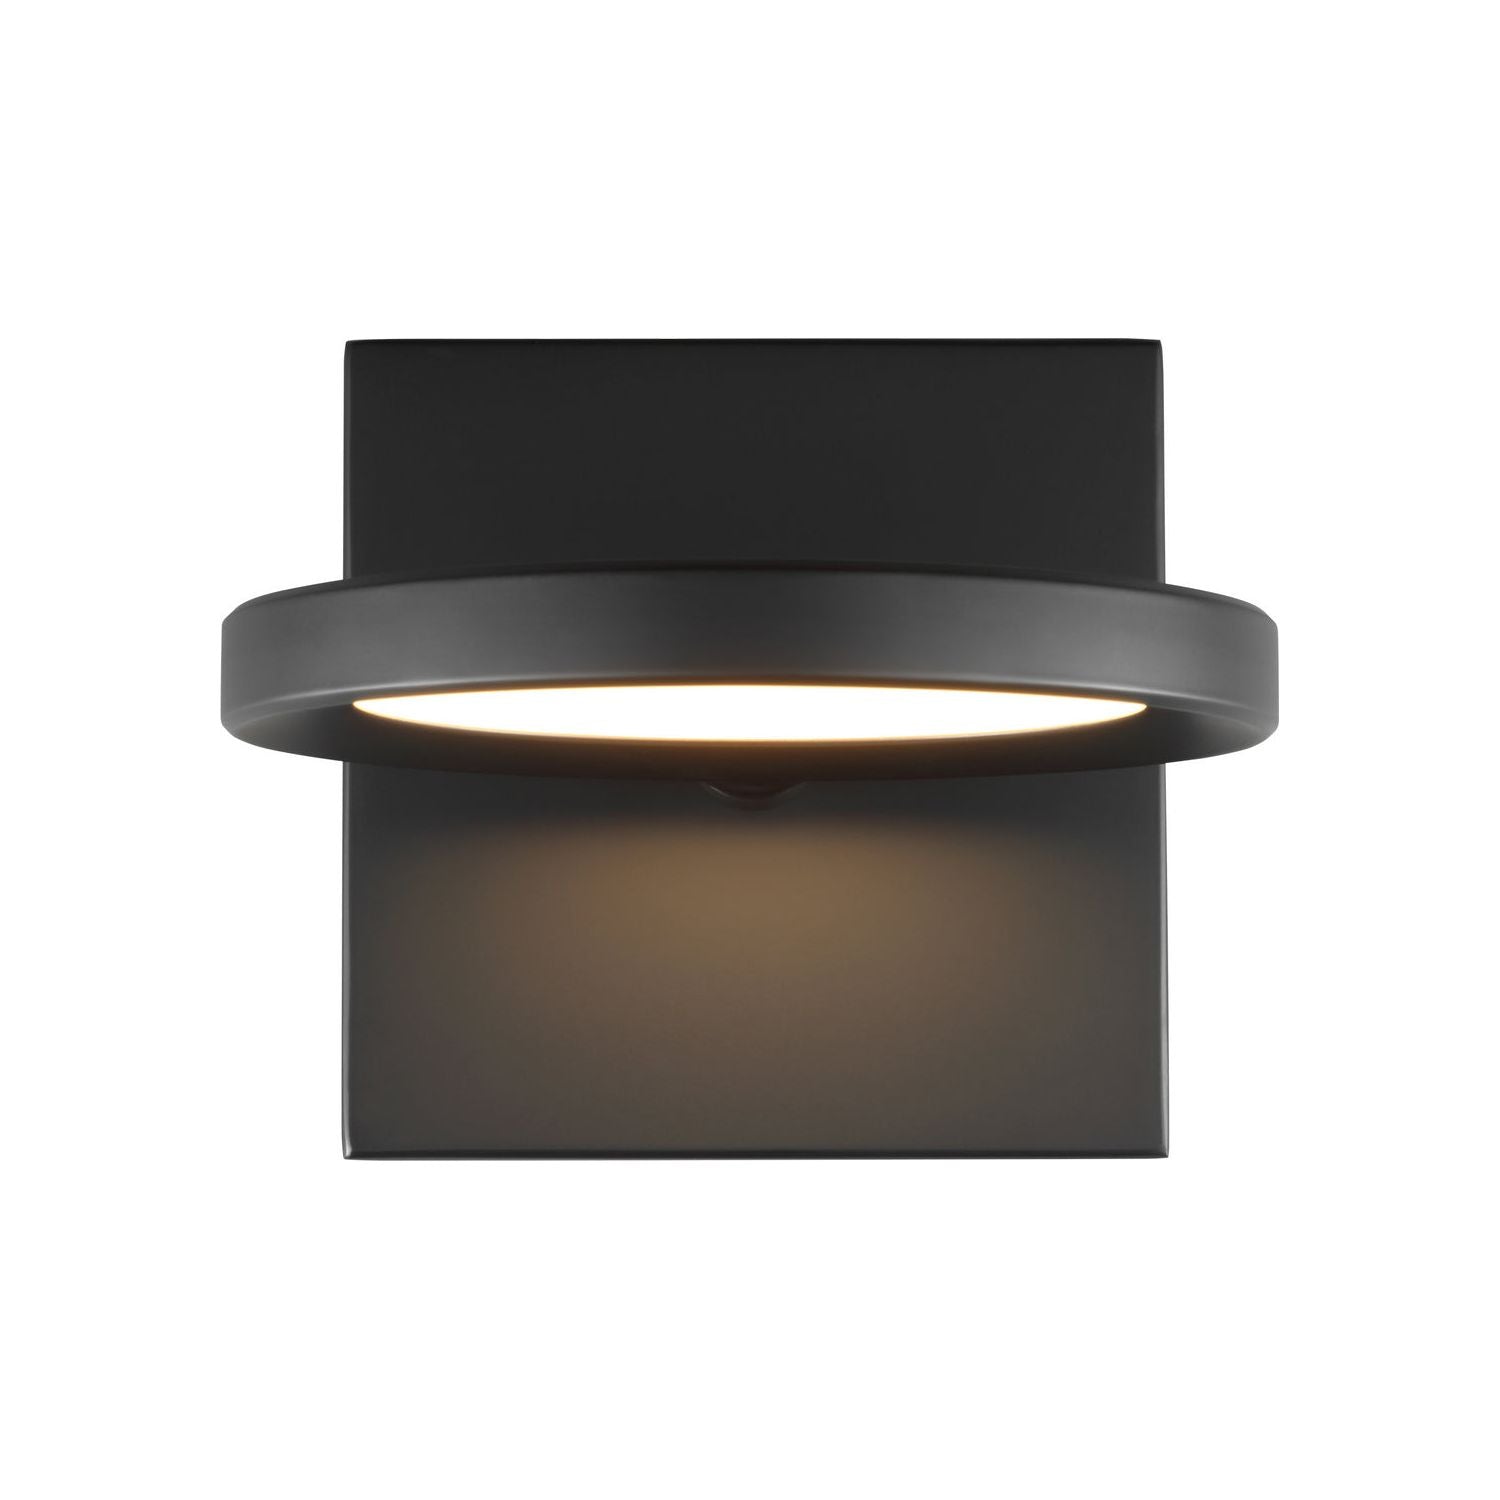 Visual Comfort Modern - 700WSSPCTB-LED930-277 - LED Wall Mount - Spectica - Matte Black